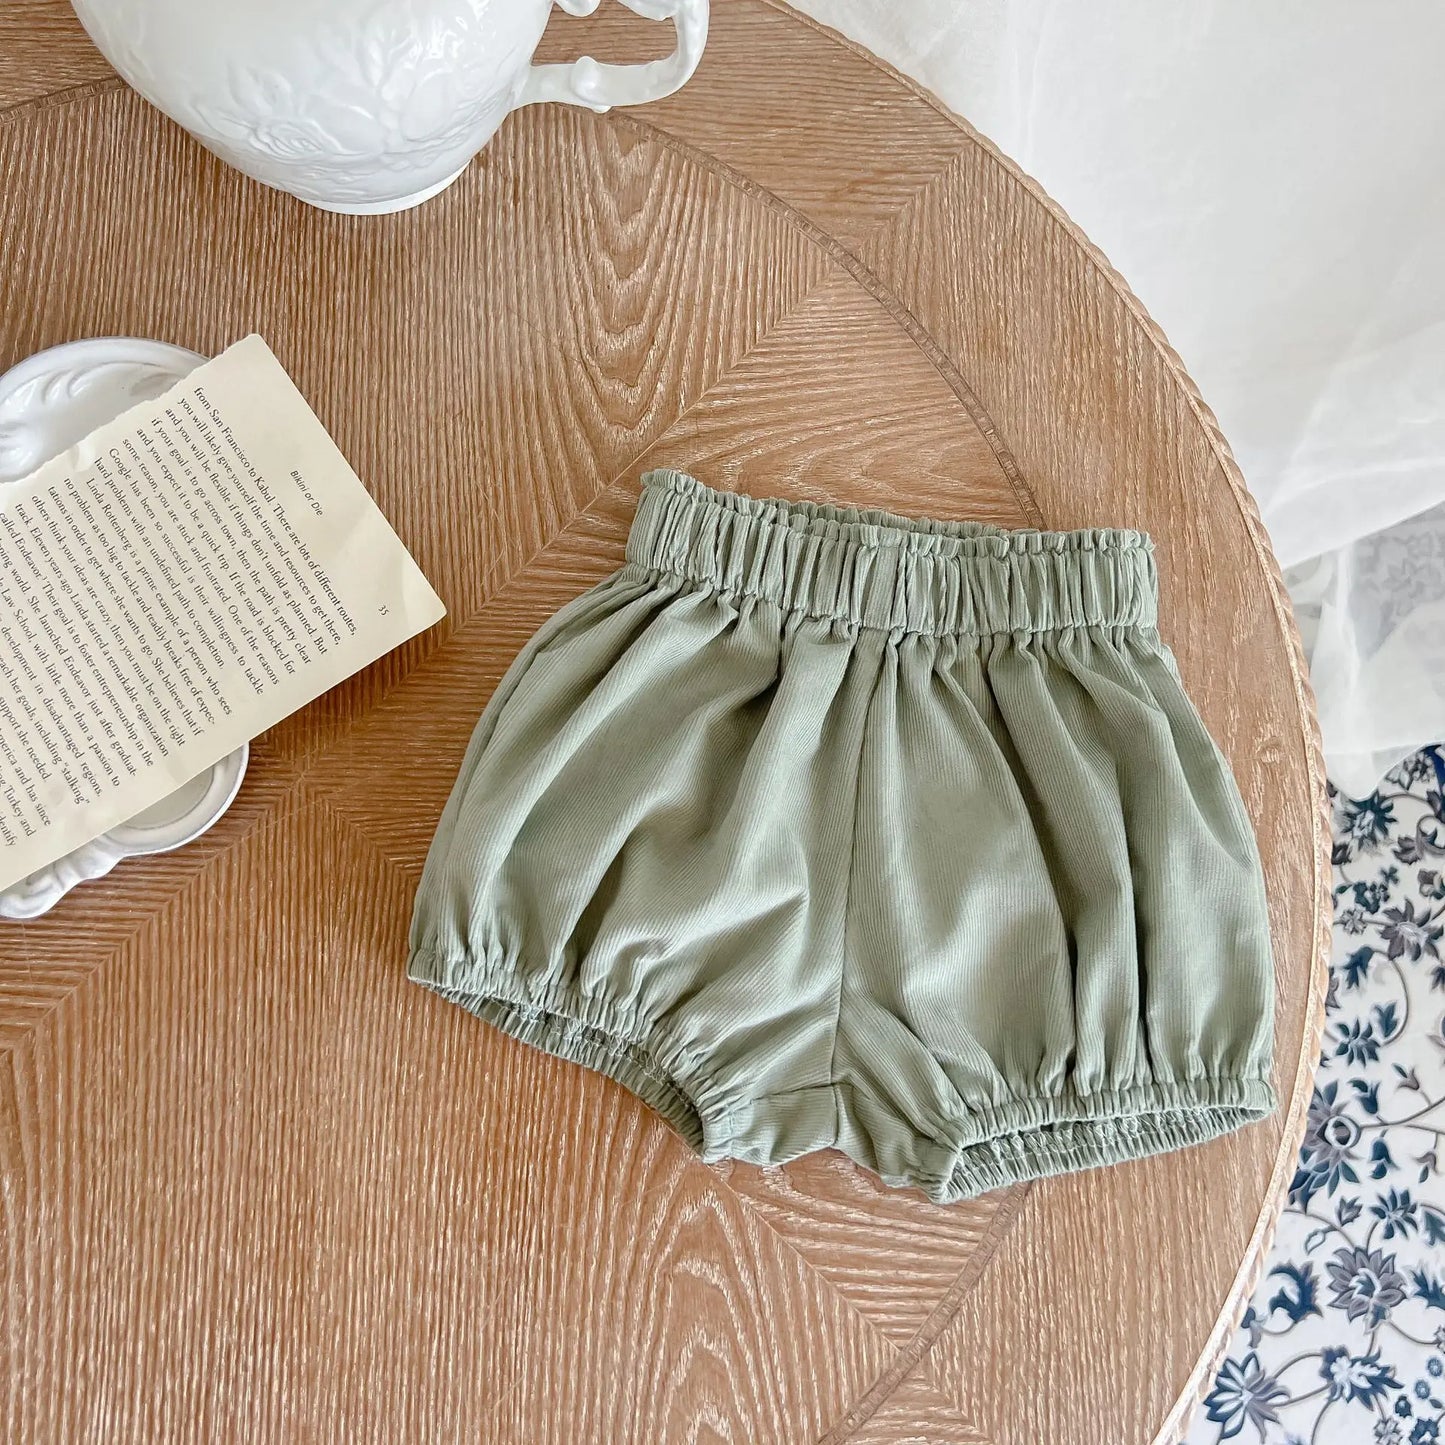 Jacquard Long-Sleeved Tops + Bloomer Shorts 100% Cotton